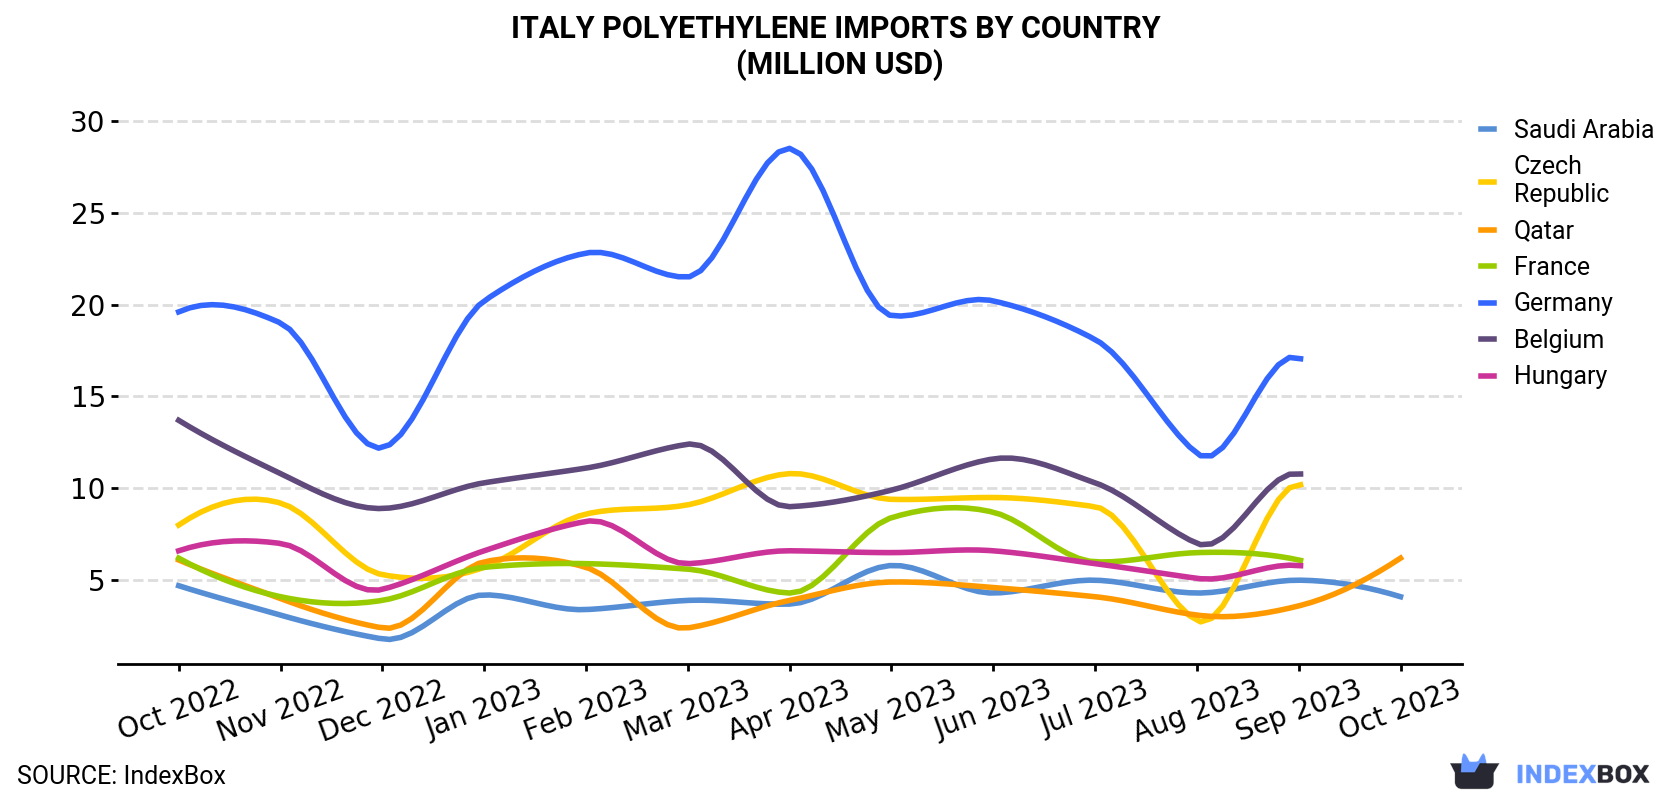 Italy Polyethylene Imports By Country (Million USD)